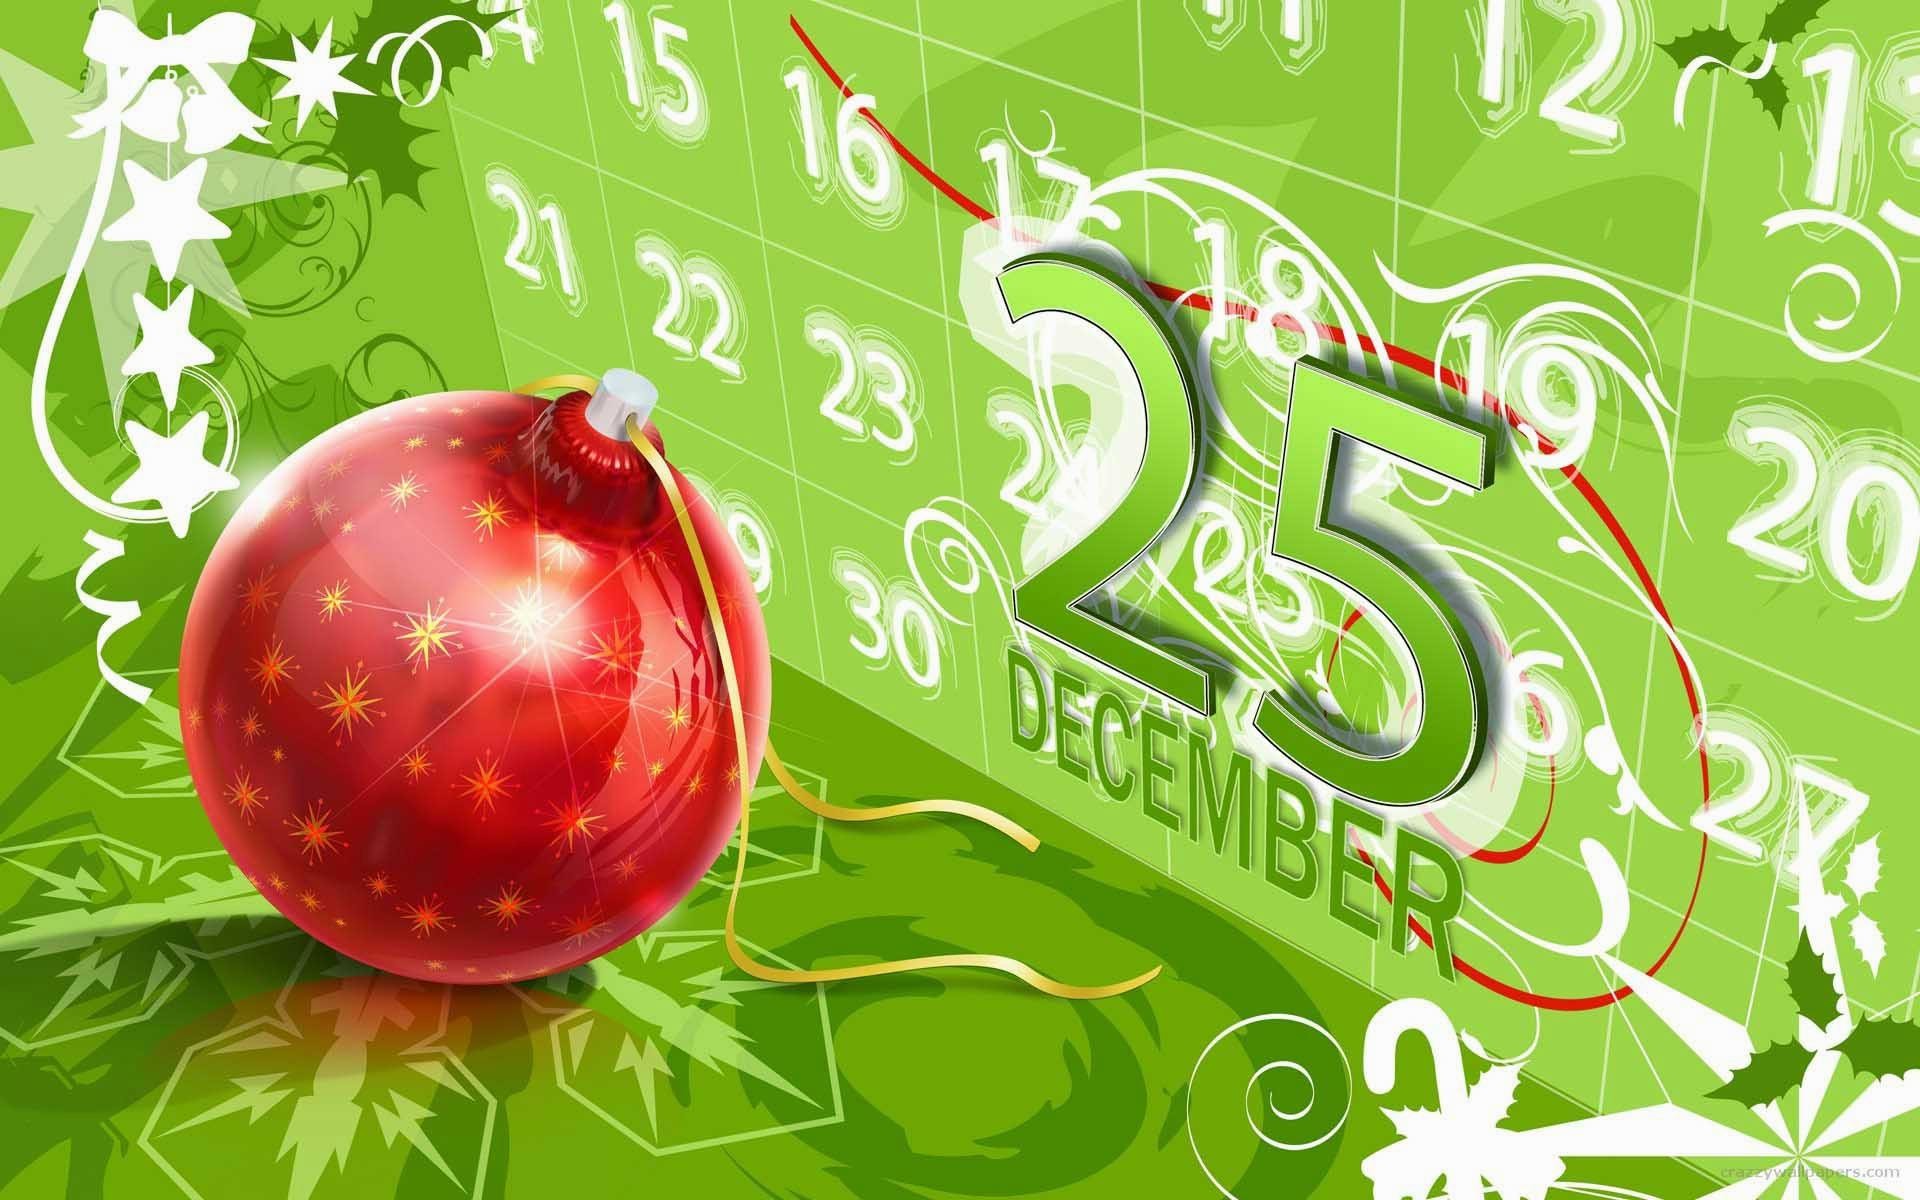 1920x1200, Christmas Countdown Desktop Wallpaper Wpc5003738 - Christmas Day 25 December - HD Wallpaper 